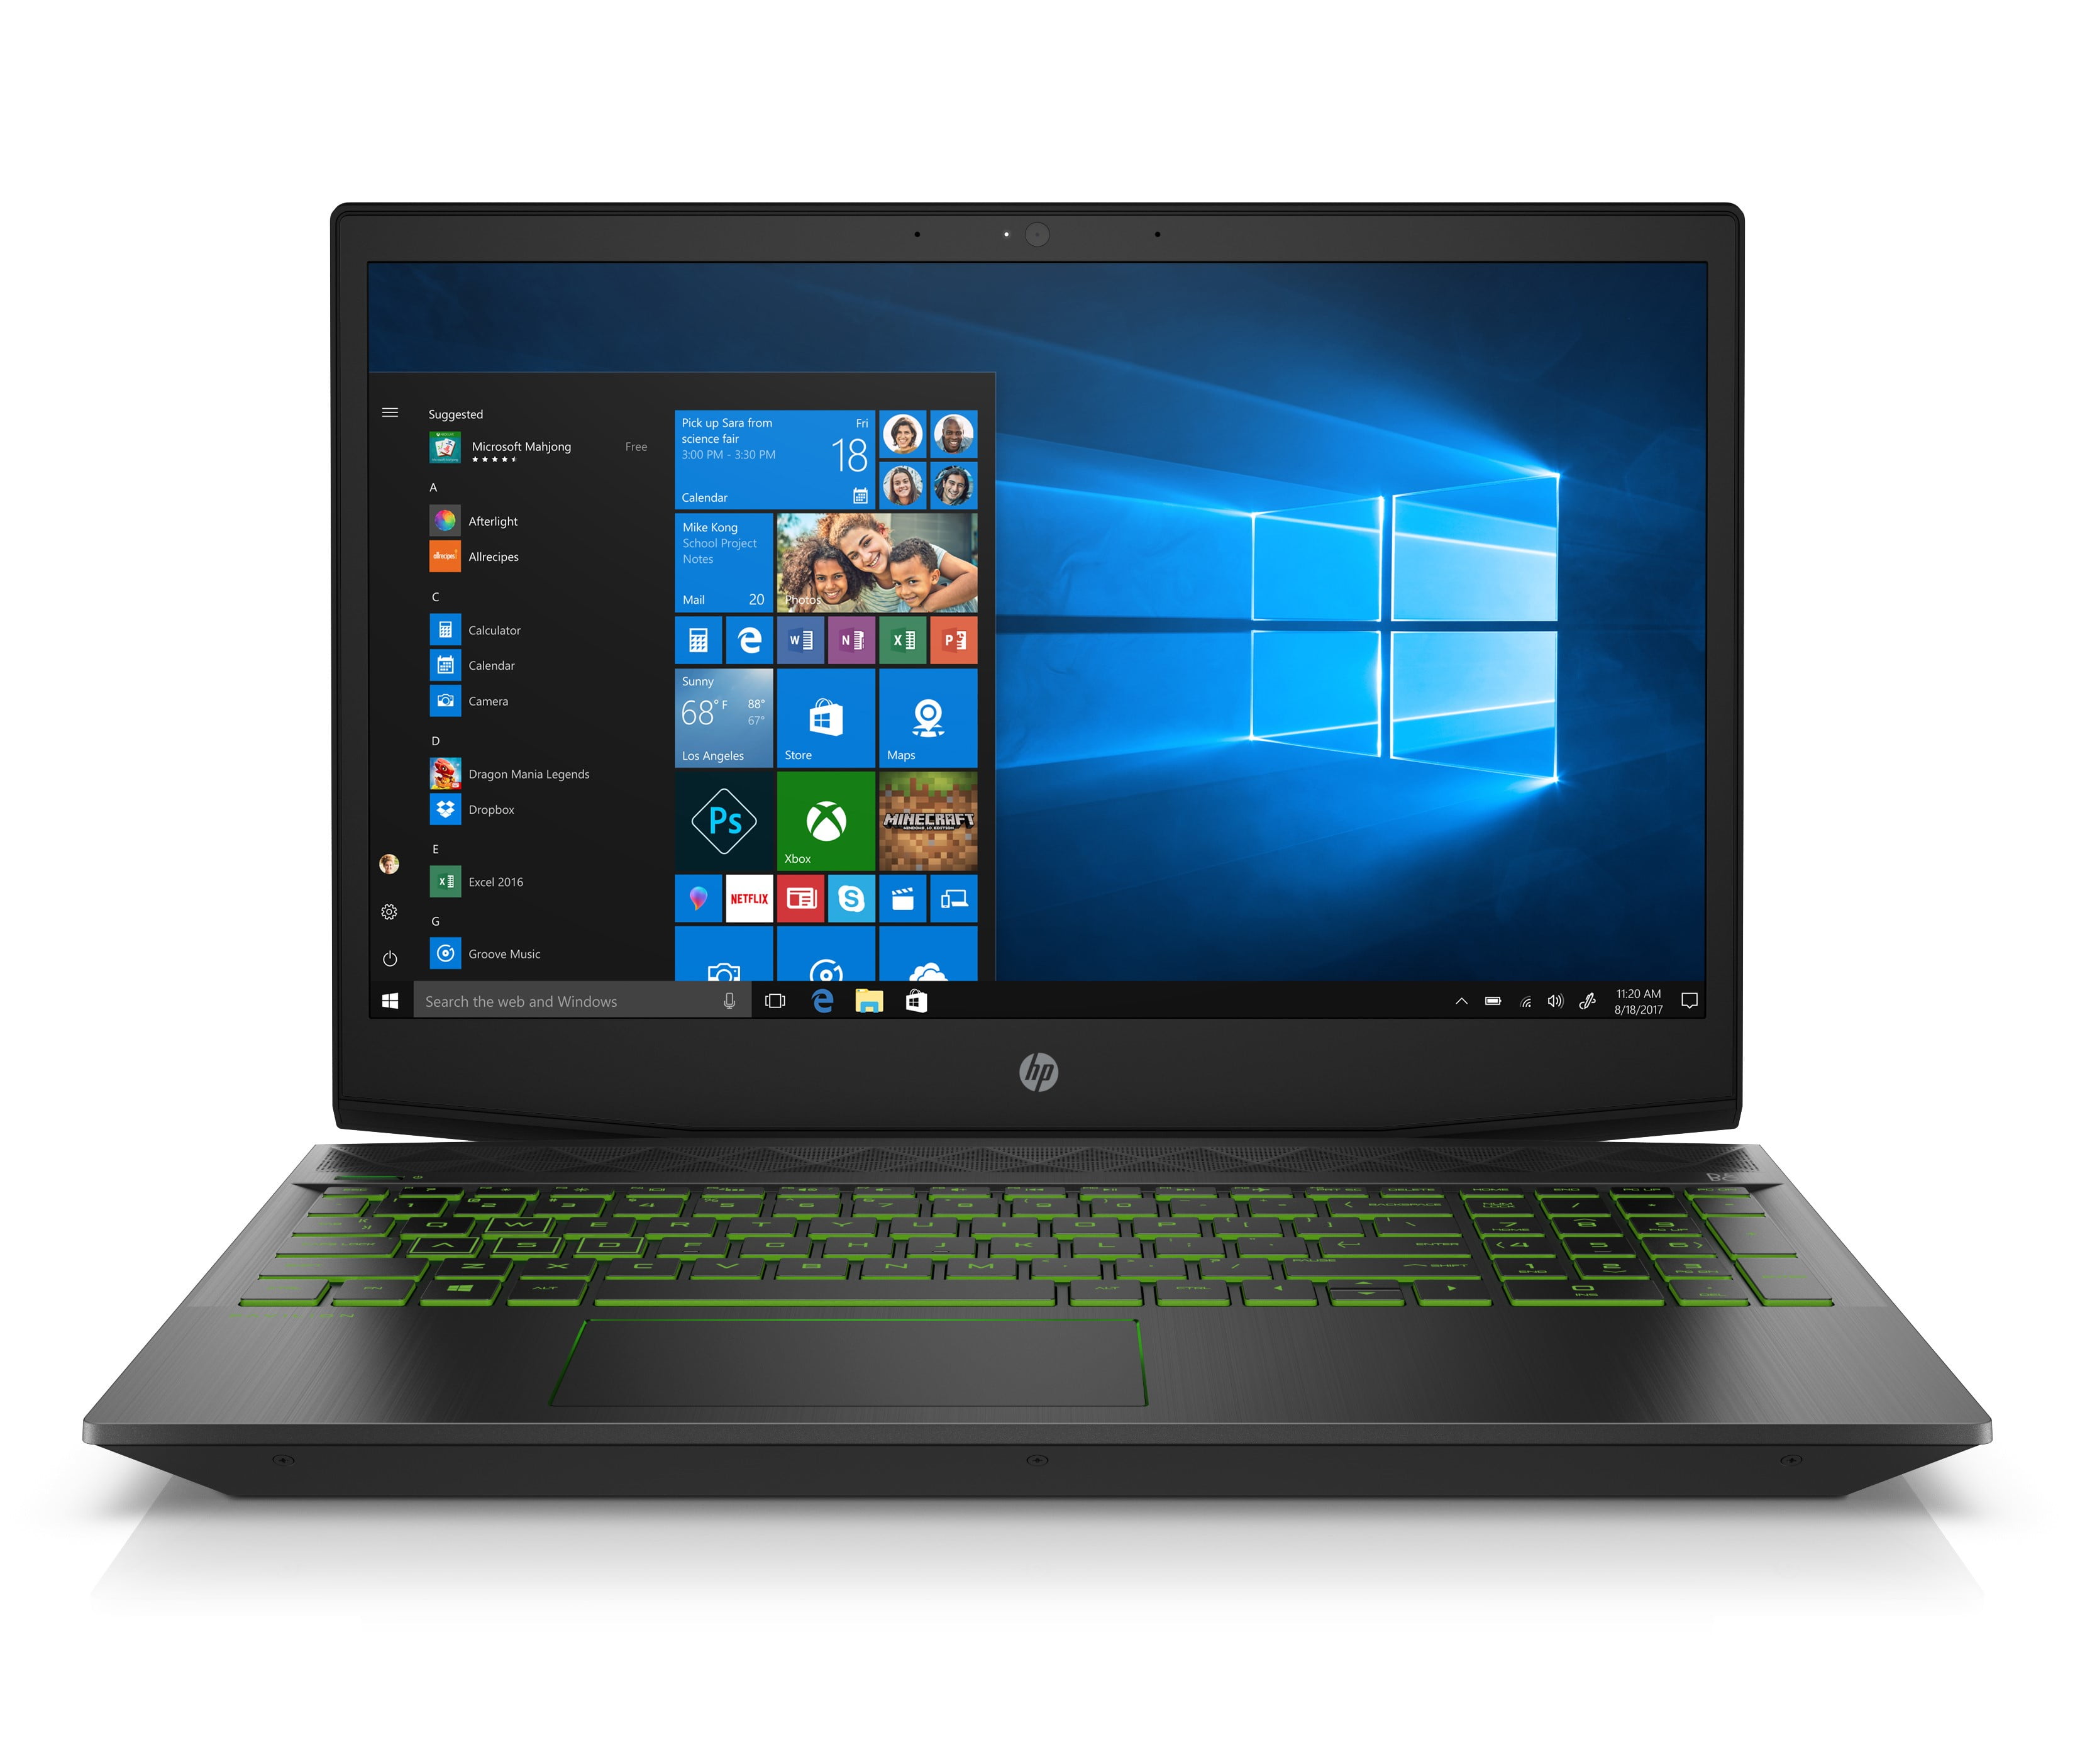 HP 15-CX0077WM Pavilion Gaming Laptop 15.6 inches Full HD, Intel Core  i7-8750, NVIDIA GeForce GTX 1060 3GB, Windows 10, 1TB HDD + 16GB Optane  memory, 